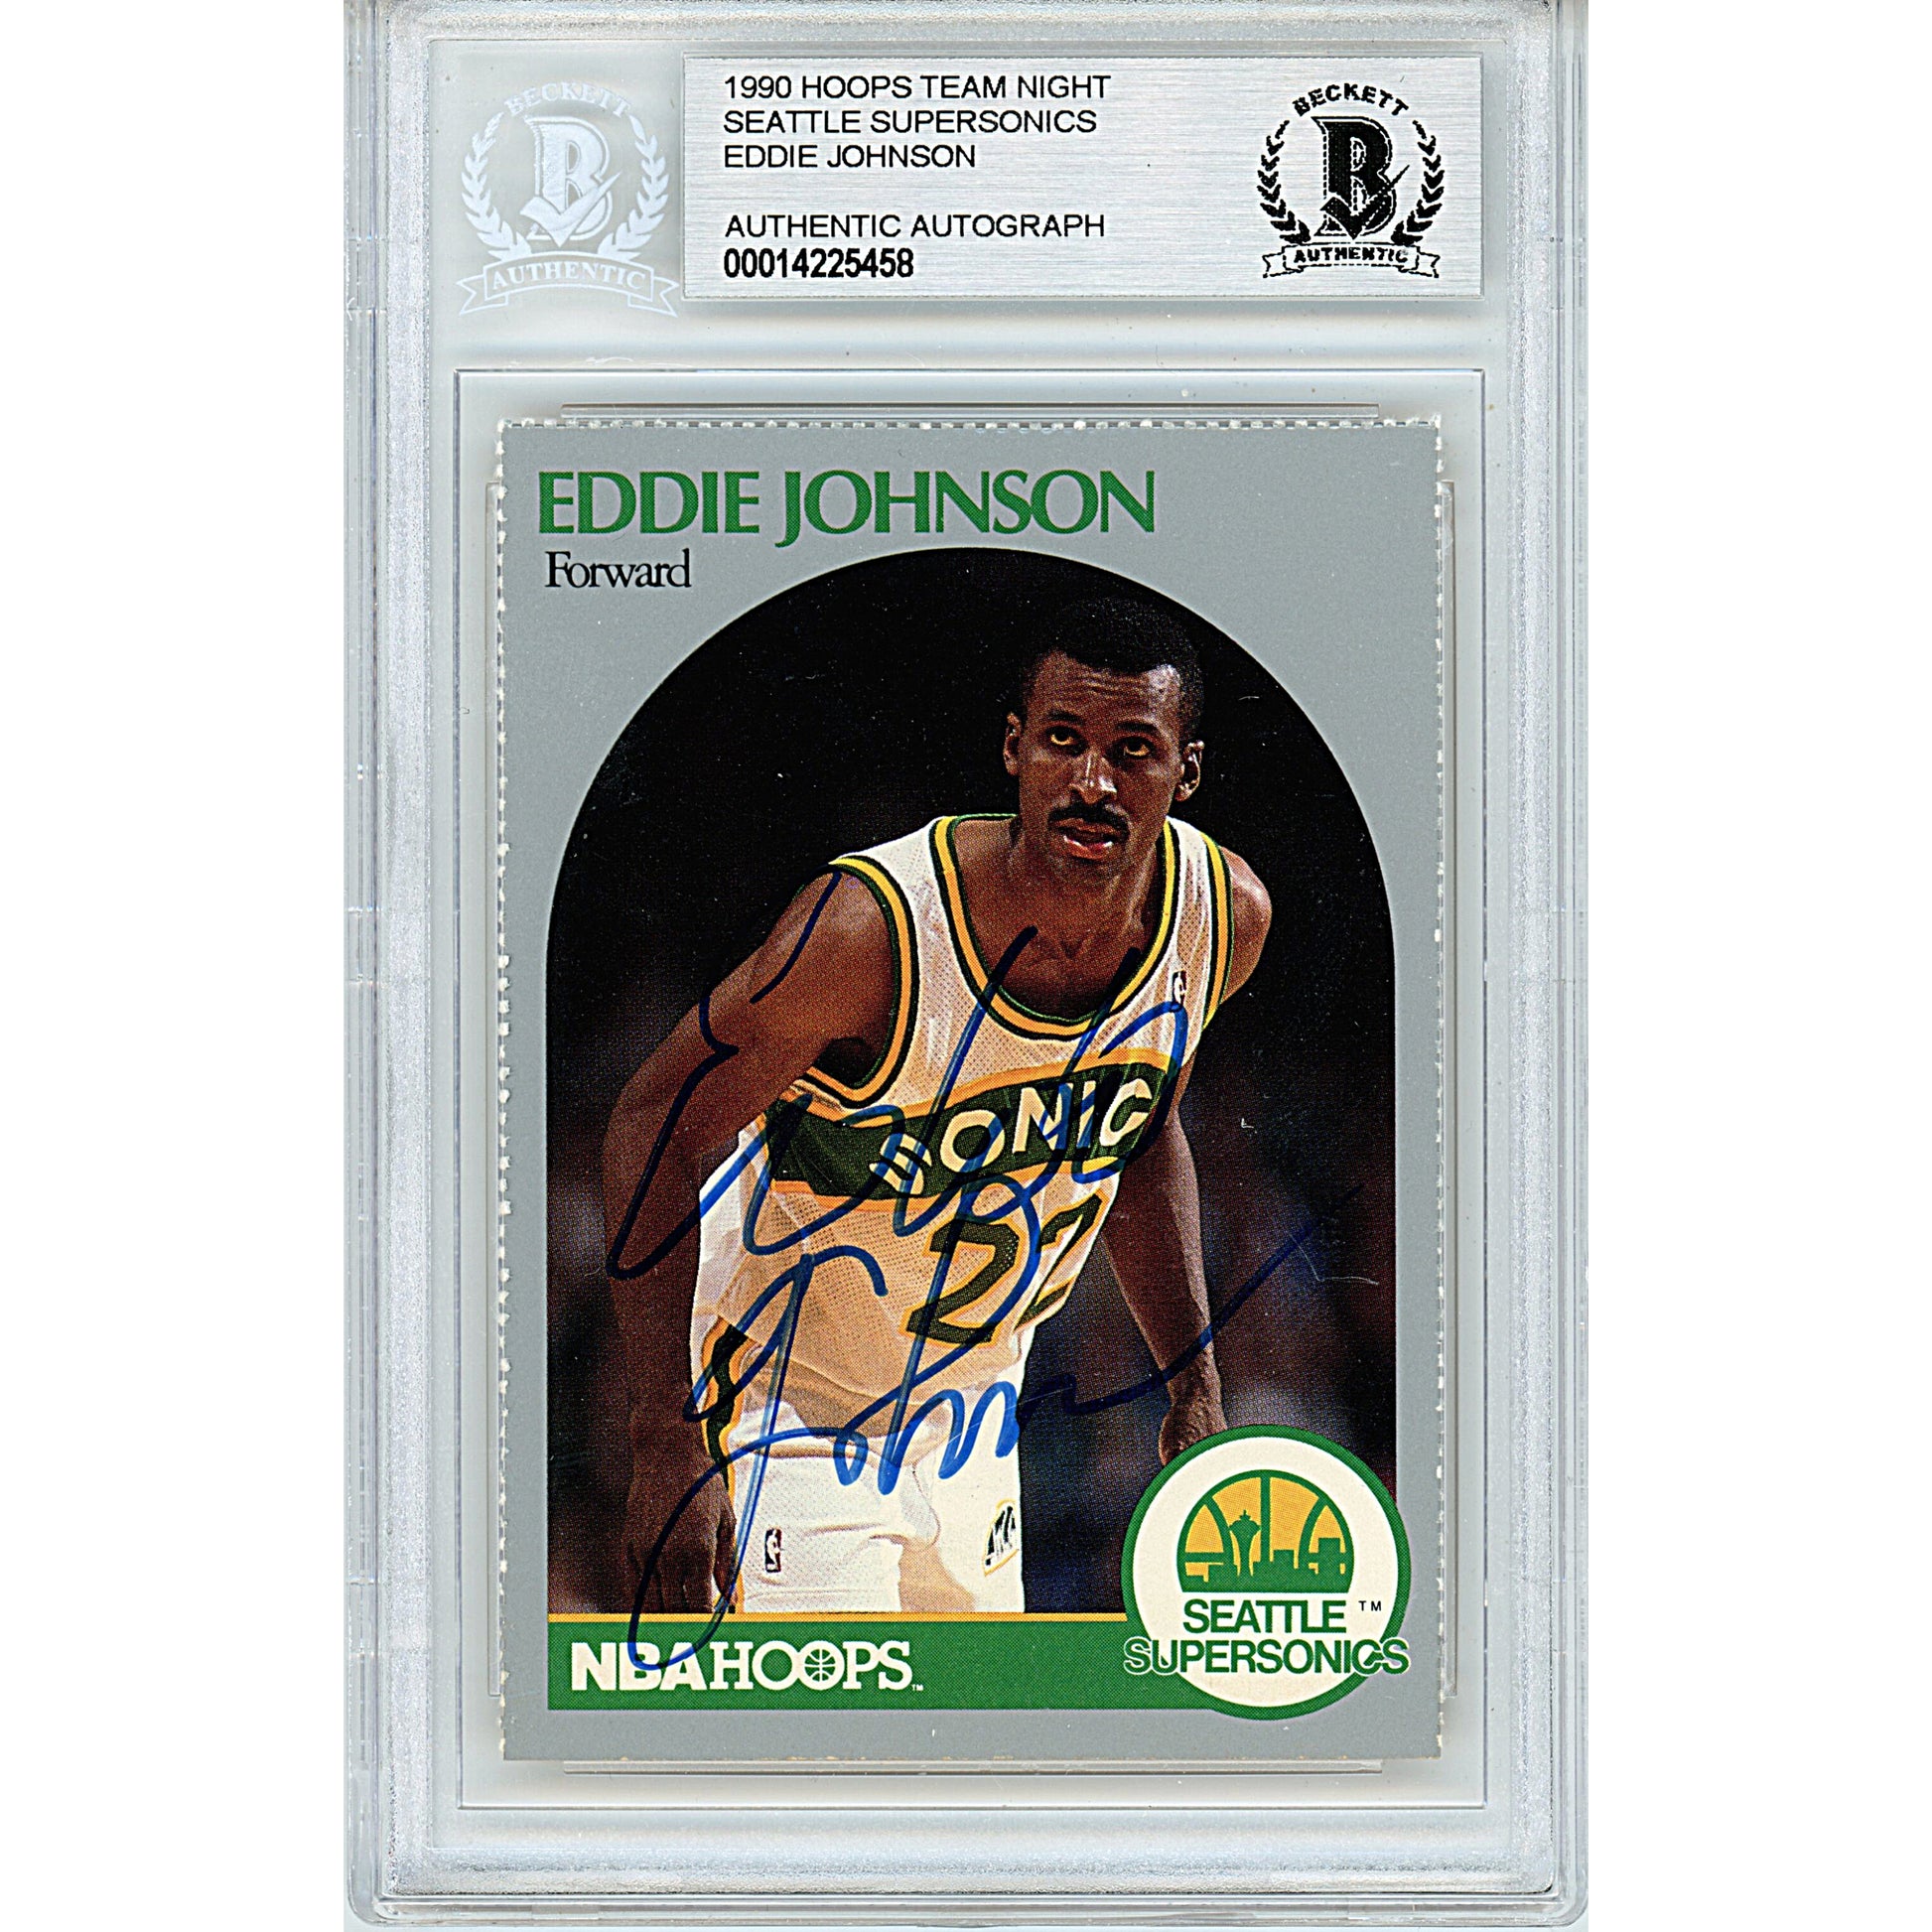 Basketballs- Autographed- Eddie Johnson Signed Seattle Supersonics 1990 Hoops Team Night Stadium Giveaway Basketball Card Beckett BAS Slabbed 00014225458 - 101